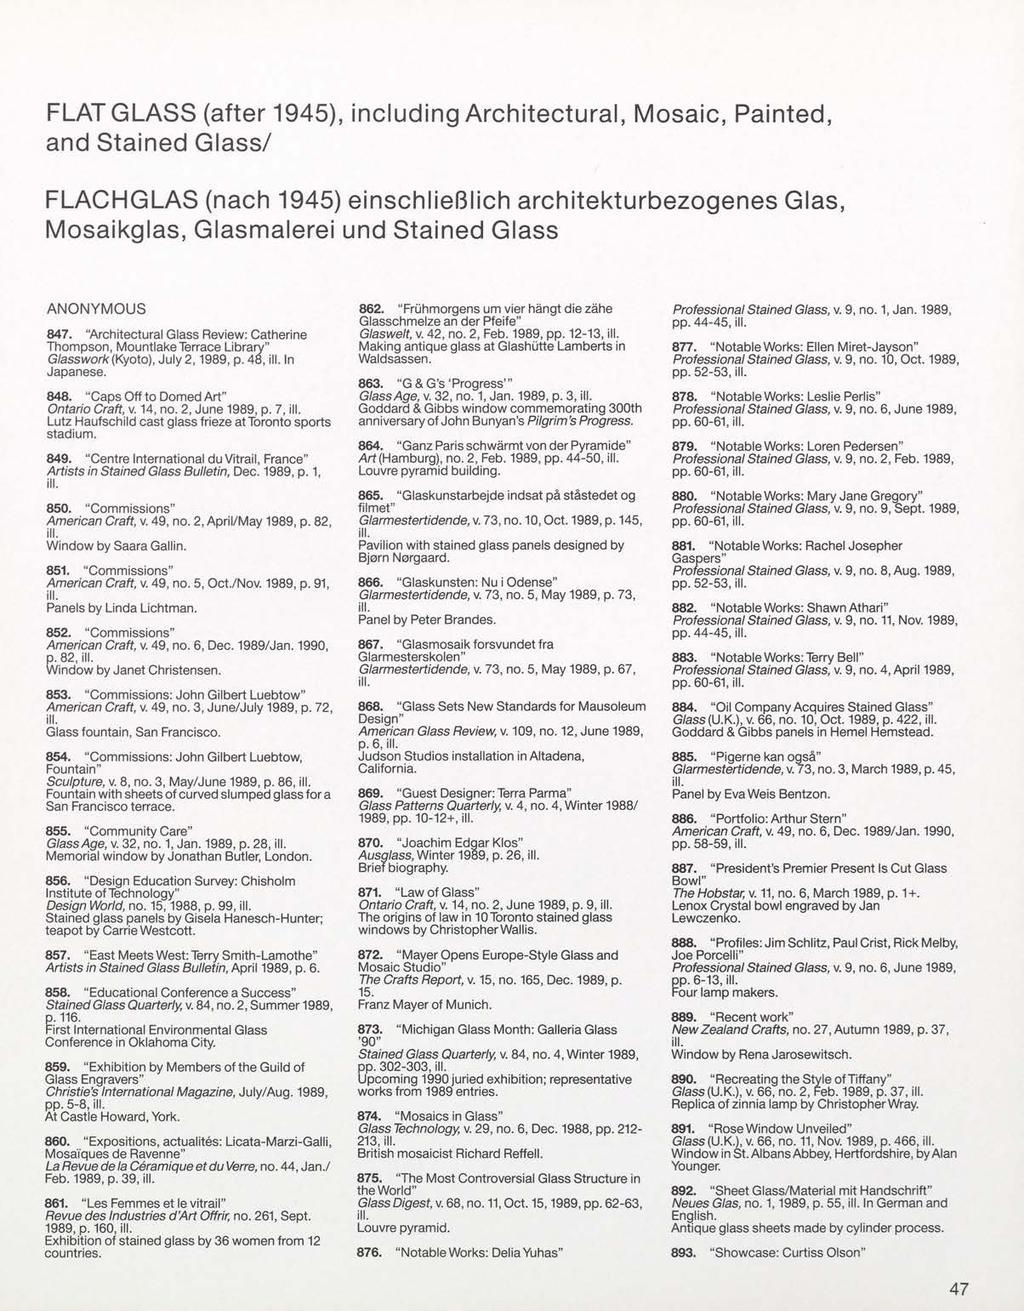 FLAT GLASS (after 1945), including Architectural, Mosaic, Painted, and Stained Glass/ FLACHGLAS (nach 1945) einschlieblich architekturbezogenes Glas, Mosaikglas, Glasmalerei und Stained Glass